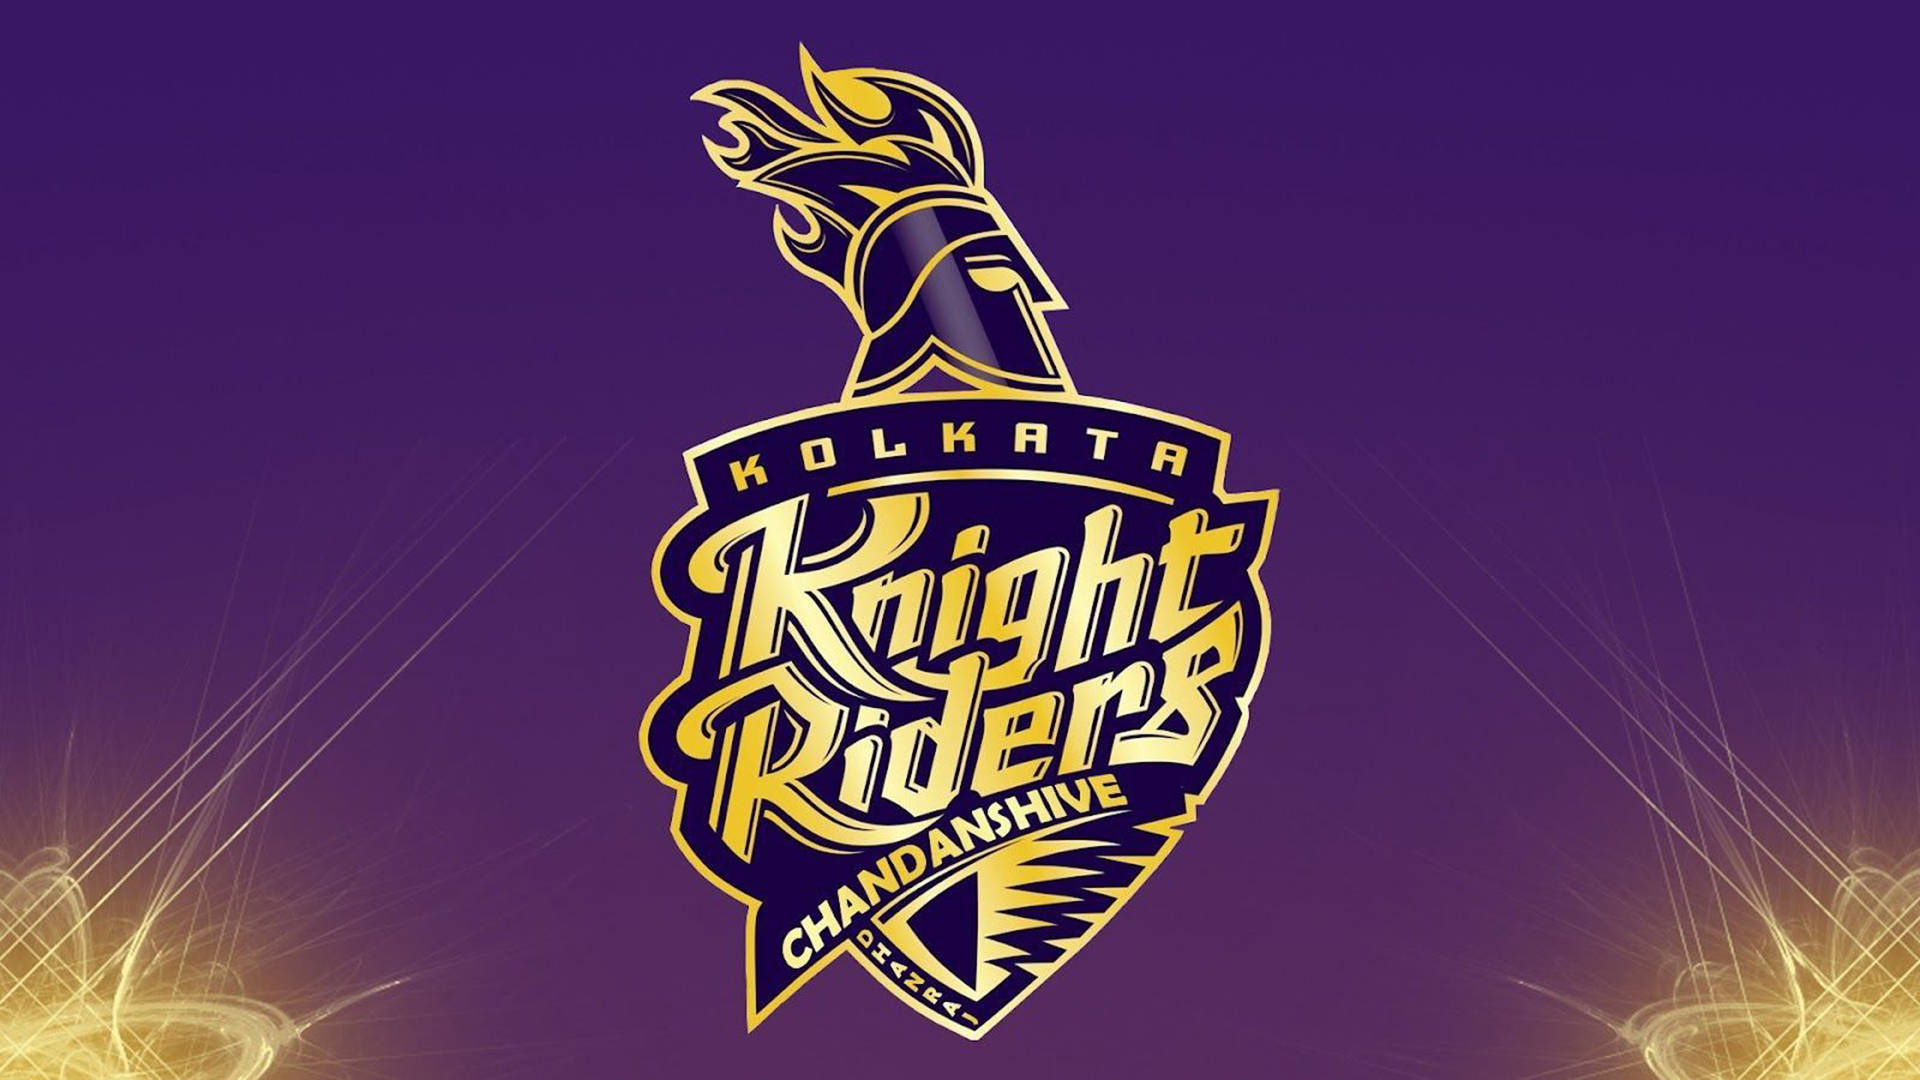 Kolkata Knight Riders Abstract Light Background